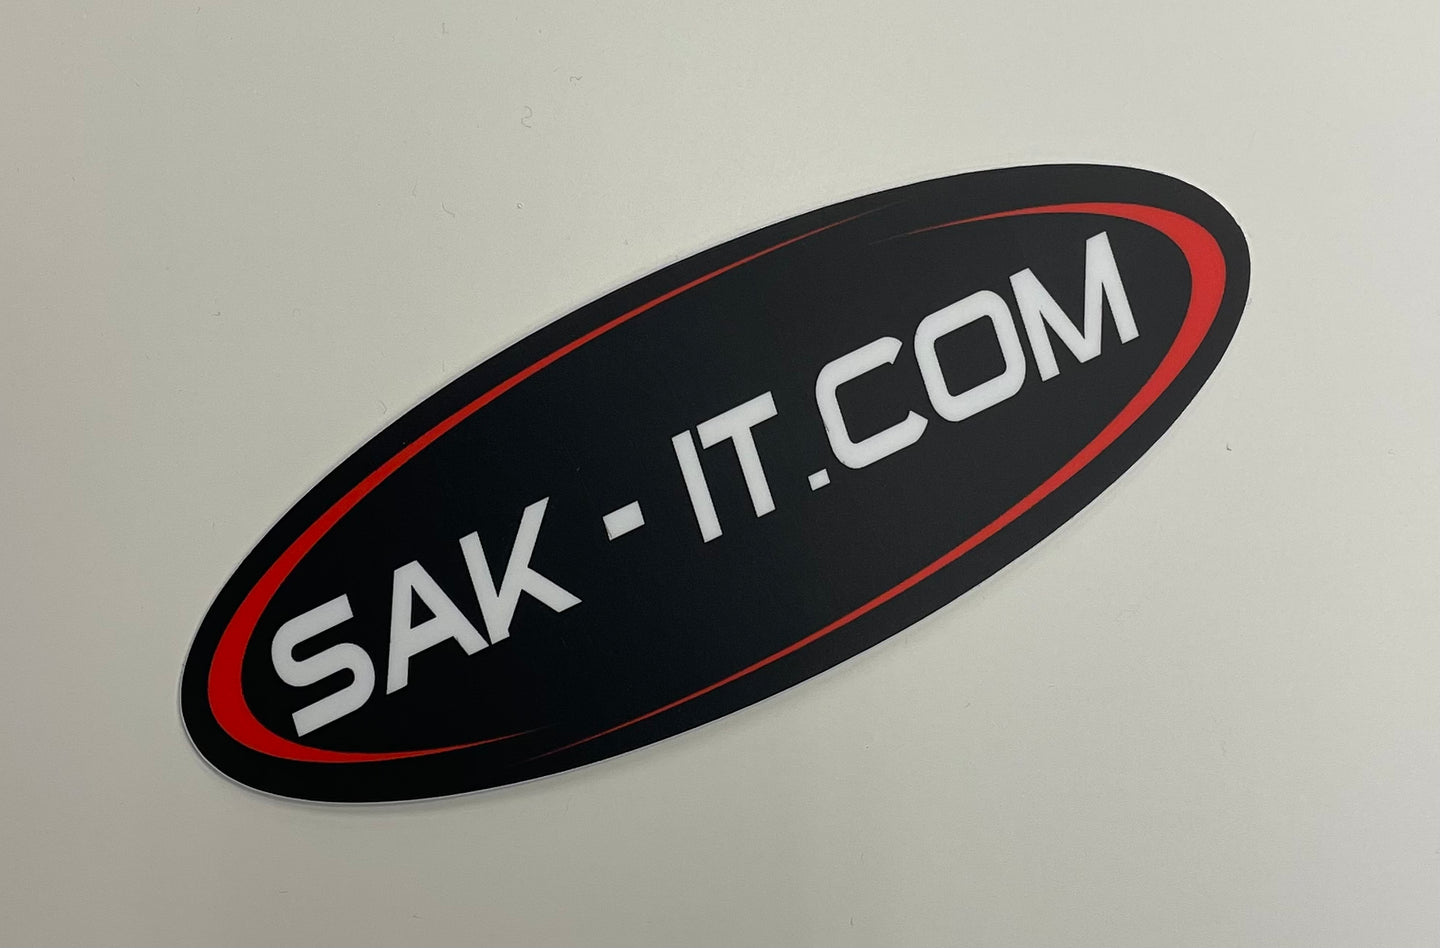 SAK-IT.COM Sticker - Large